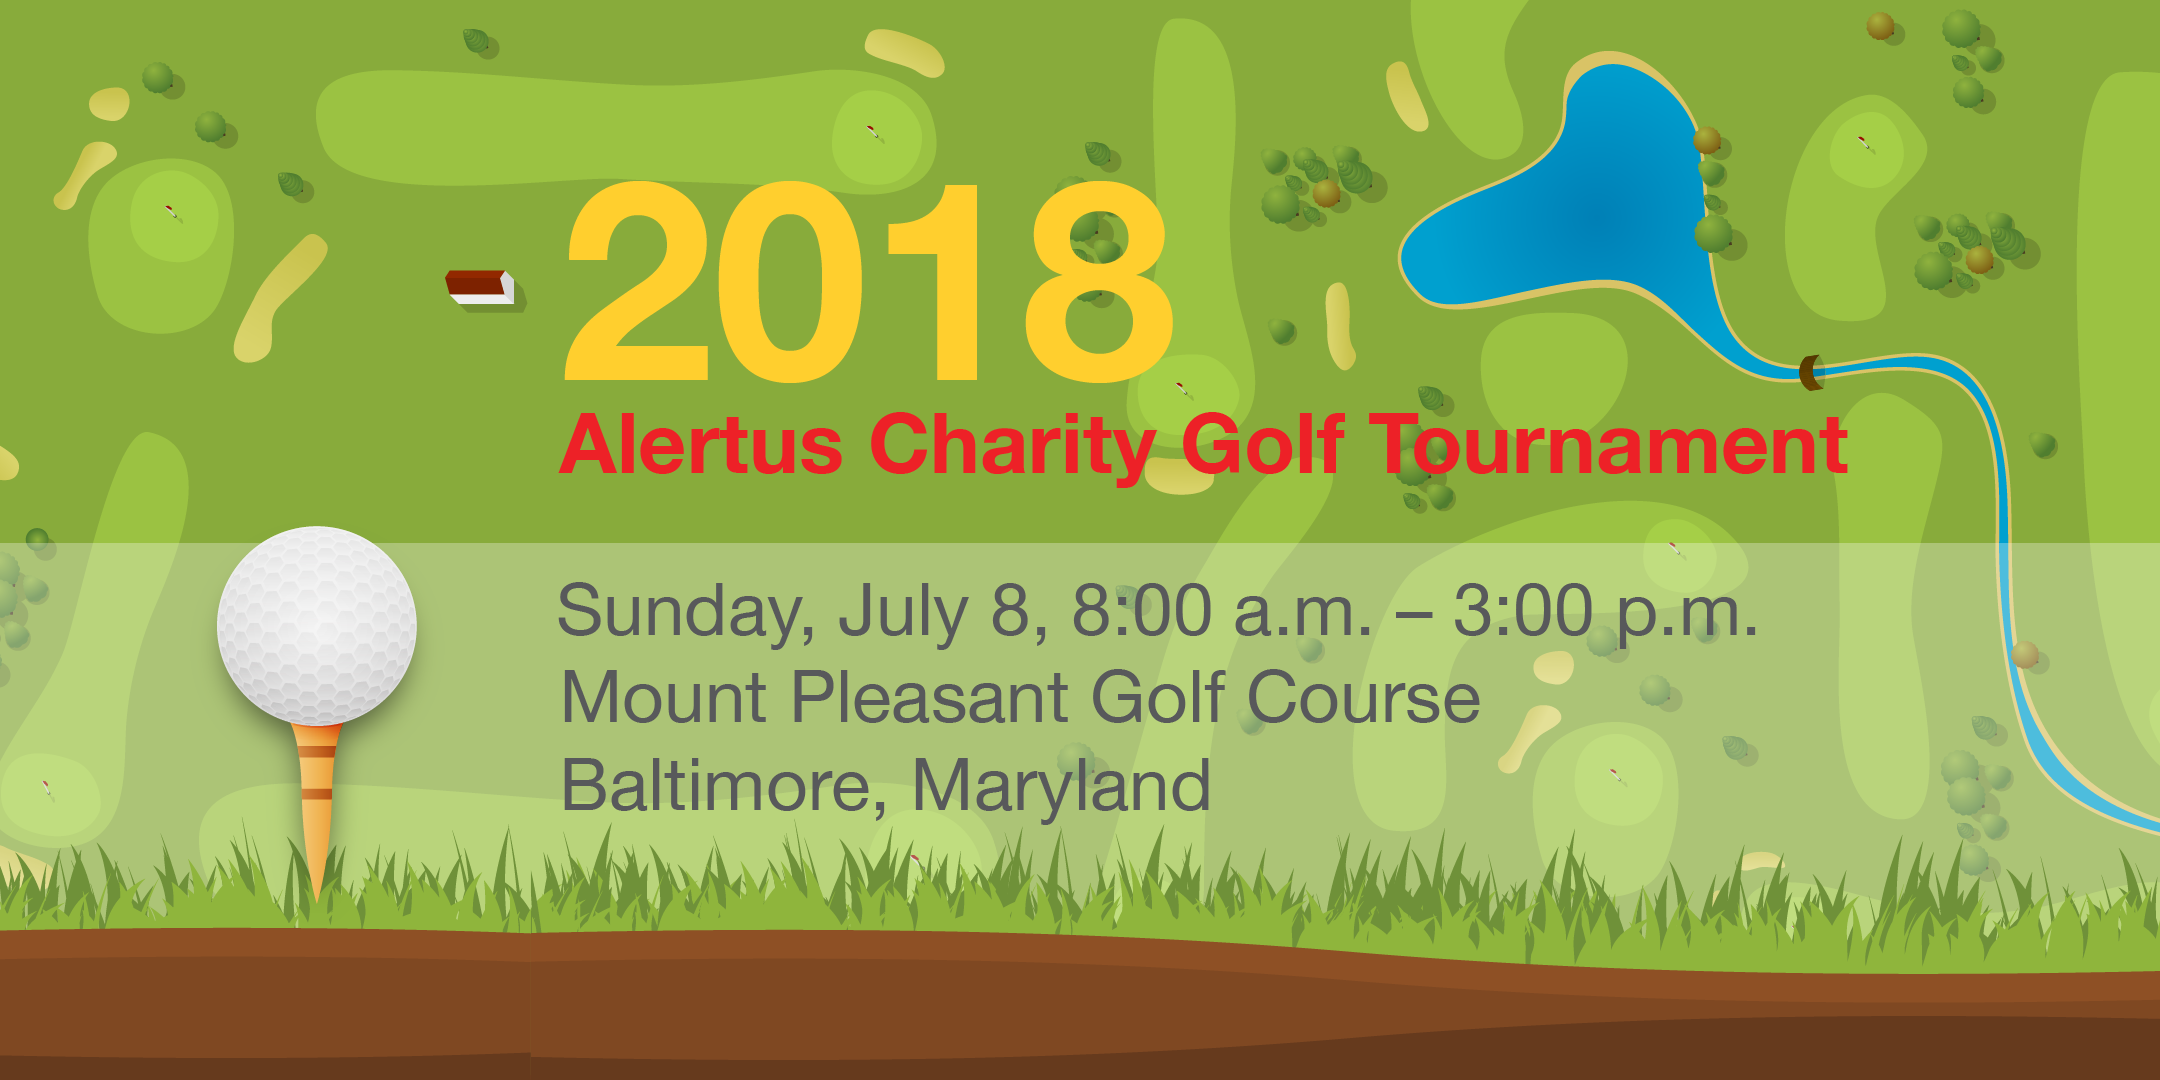 2018 Alertus Charity Golf Tournament for CSHEMA Scholarship